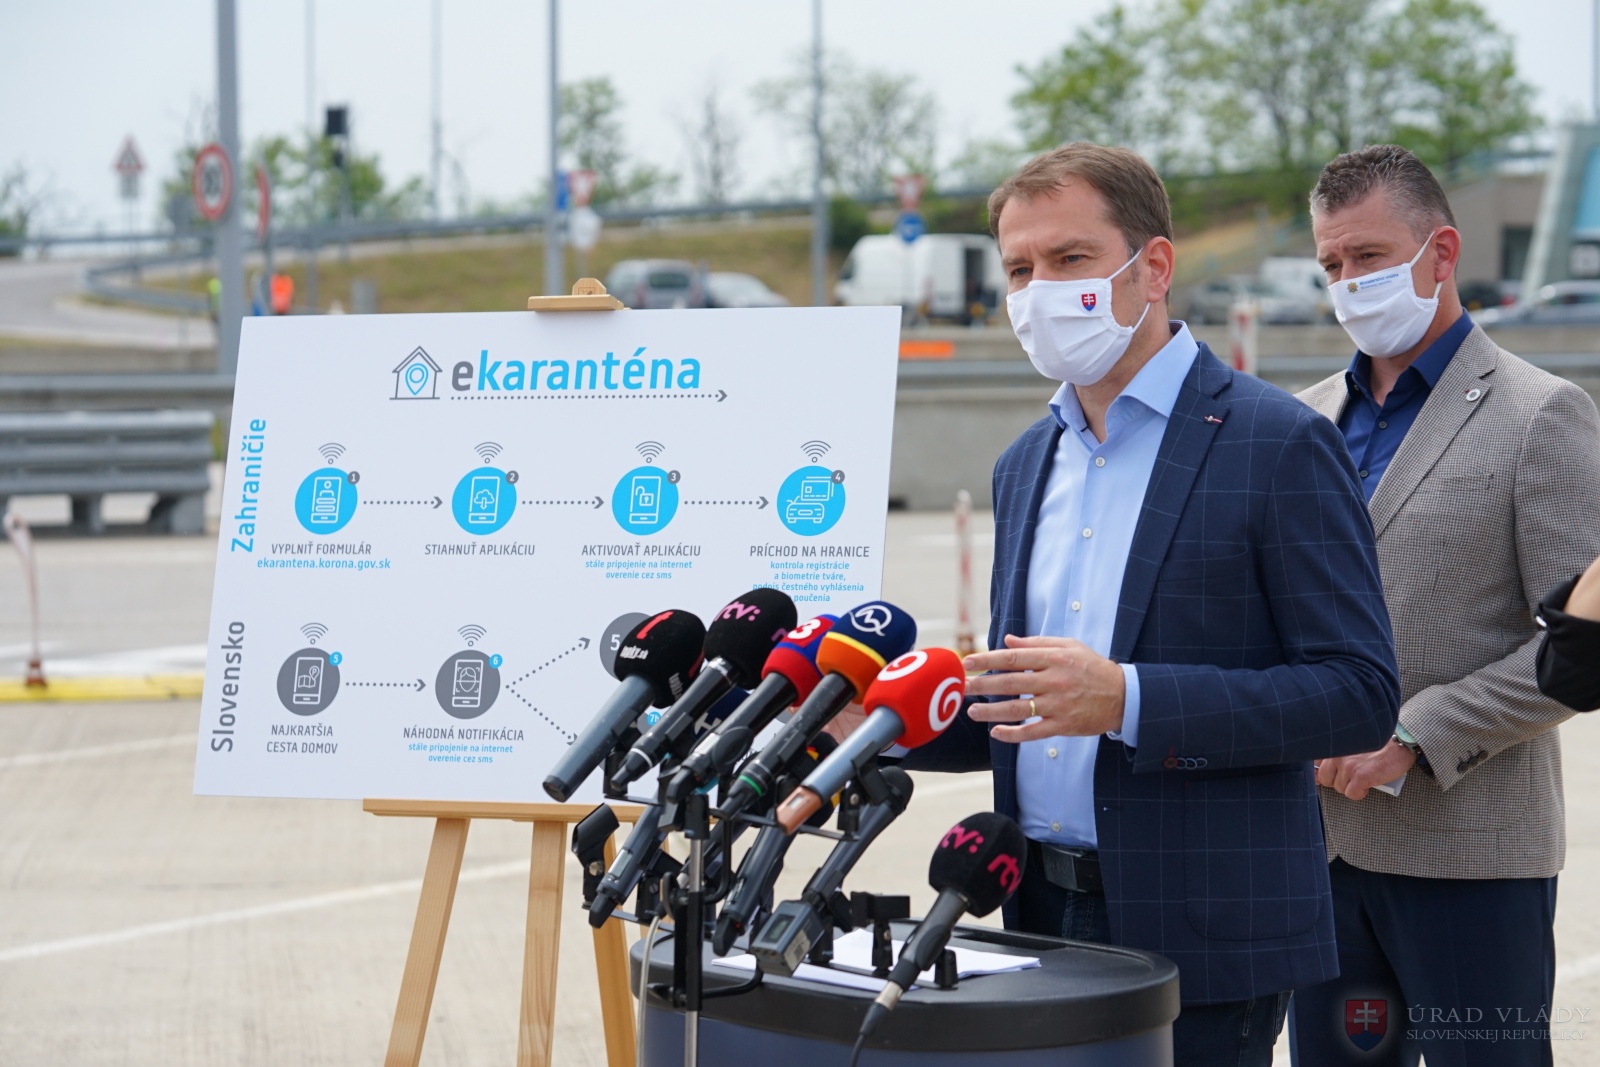 Question Marks over Slovak Quarantine App Fuel Privacy Concern